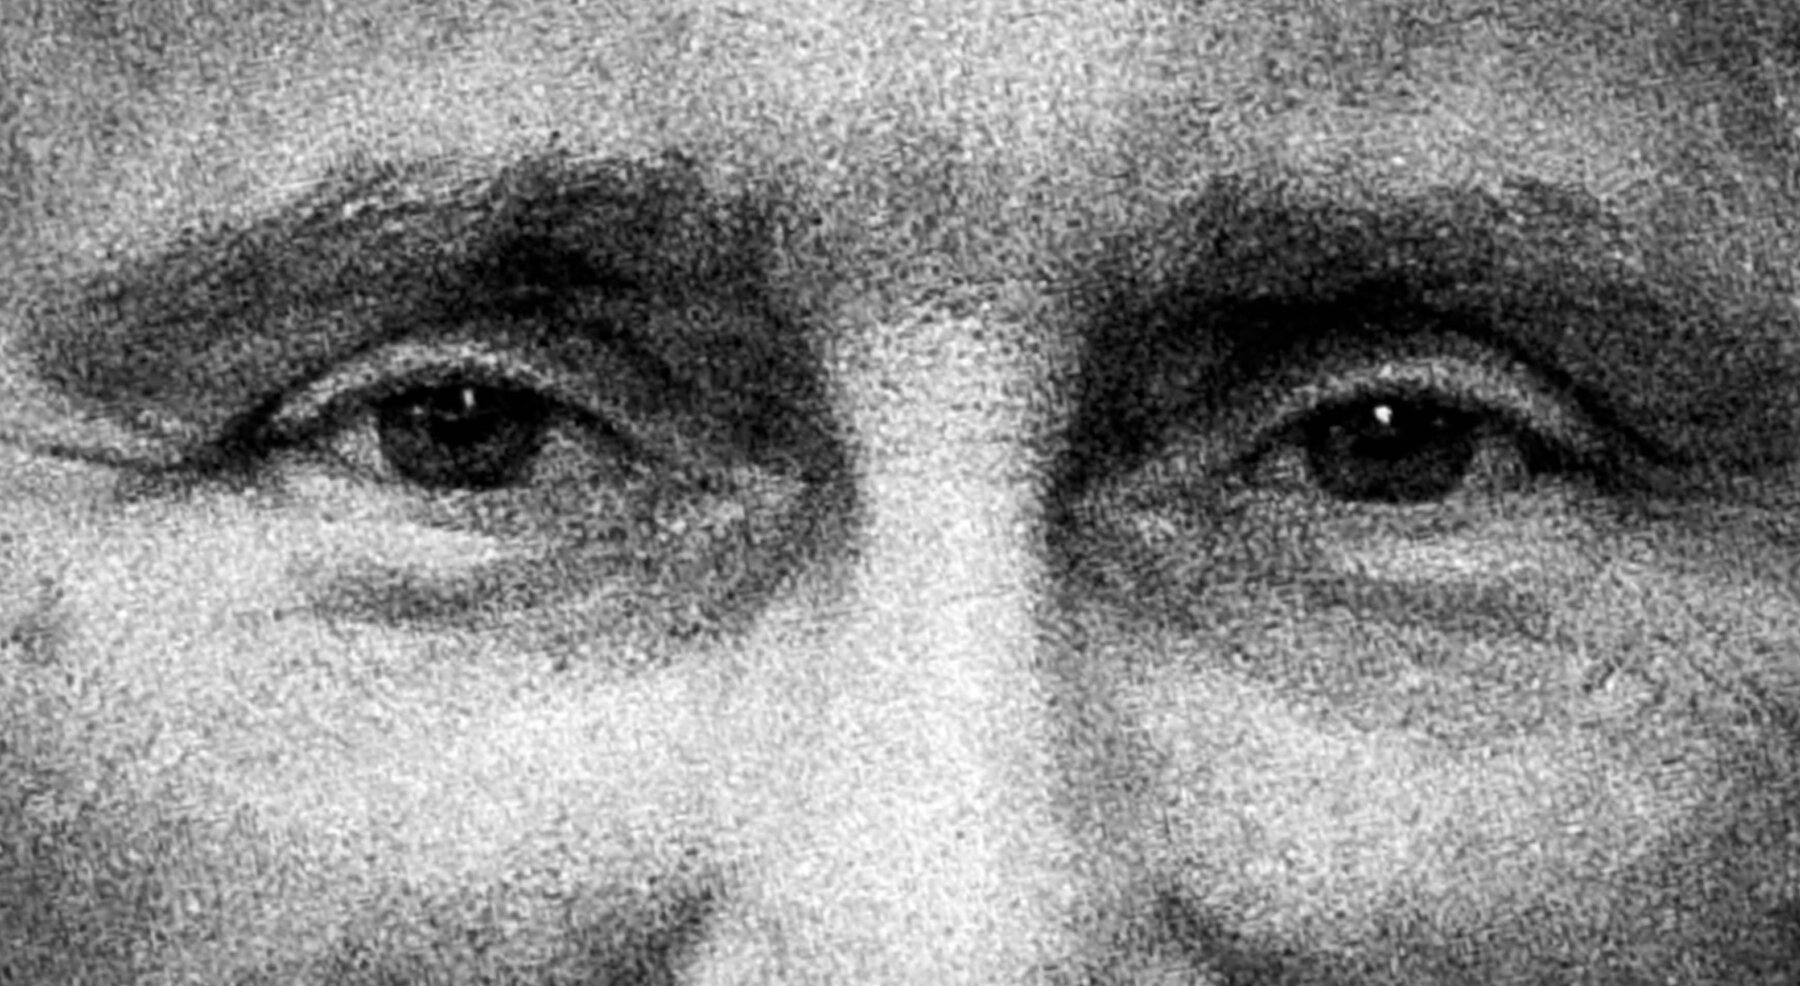 High Quality Vladimir Putin creepy eyes Blank Meme Template